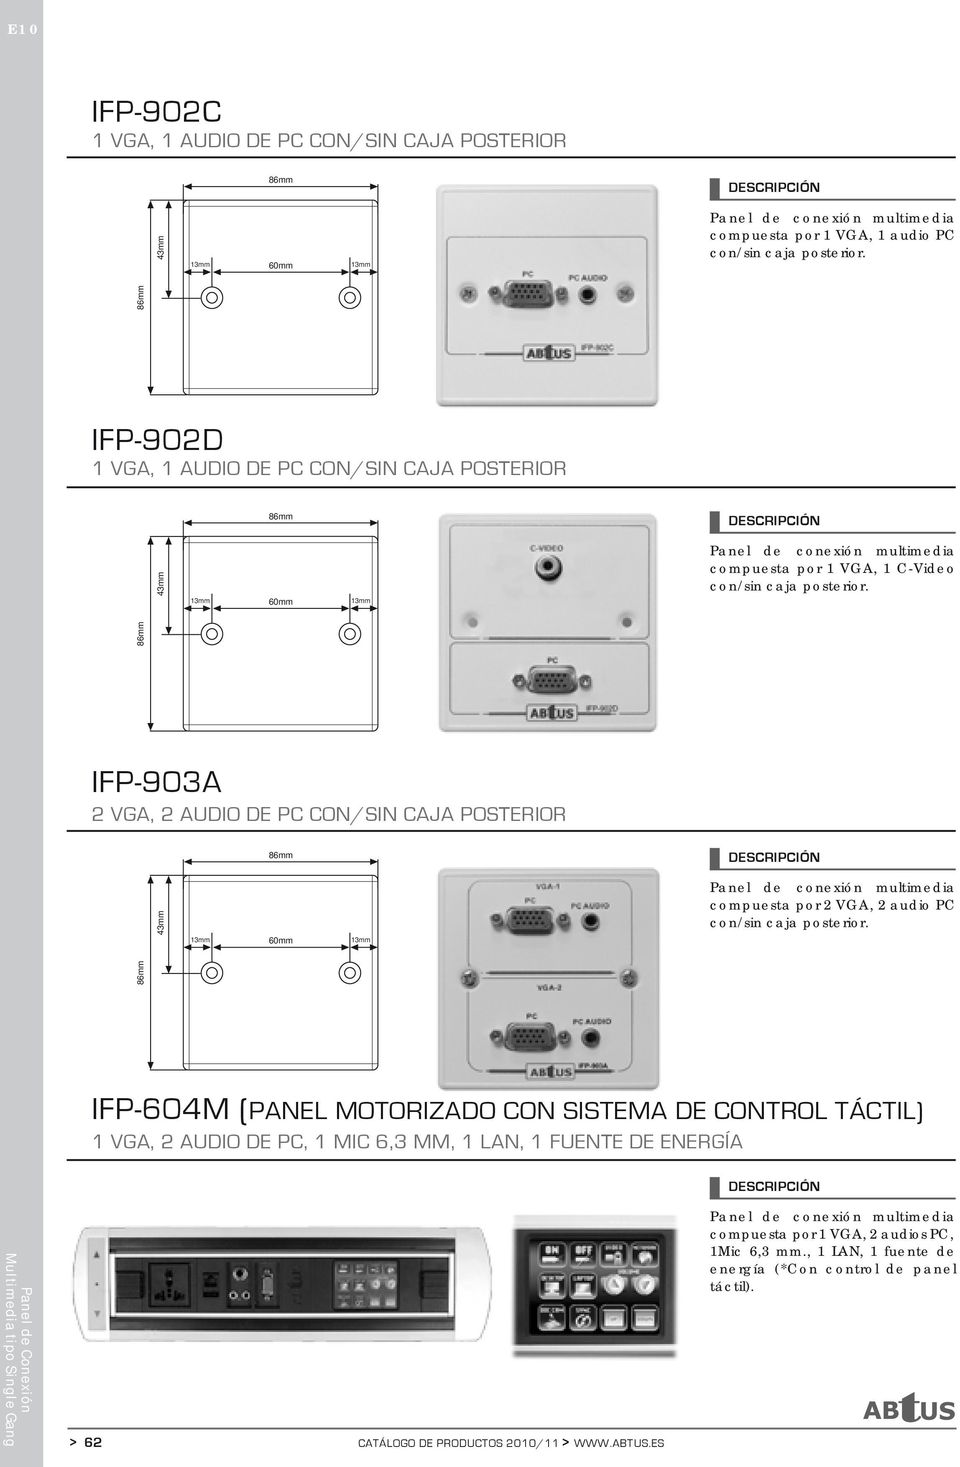 IFP-903A 2 VGA, 2 AUDIO DE PC CON/SIN CAJA POSTERIOR compuesta por 2 VGA, 2 audio PC con/sin caja posterior.